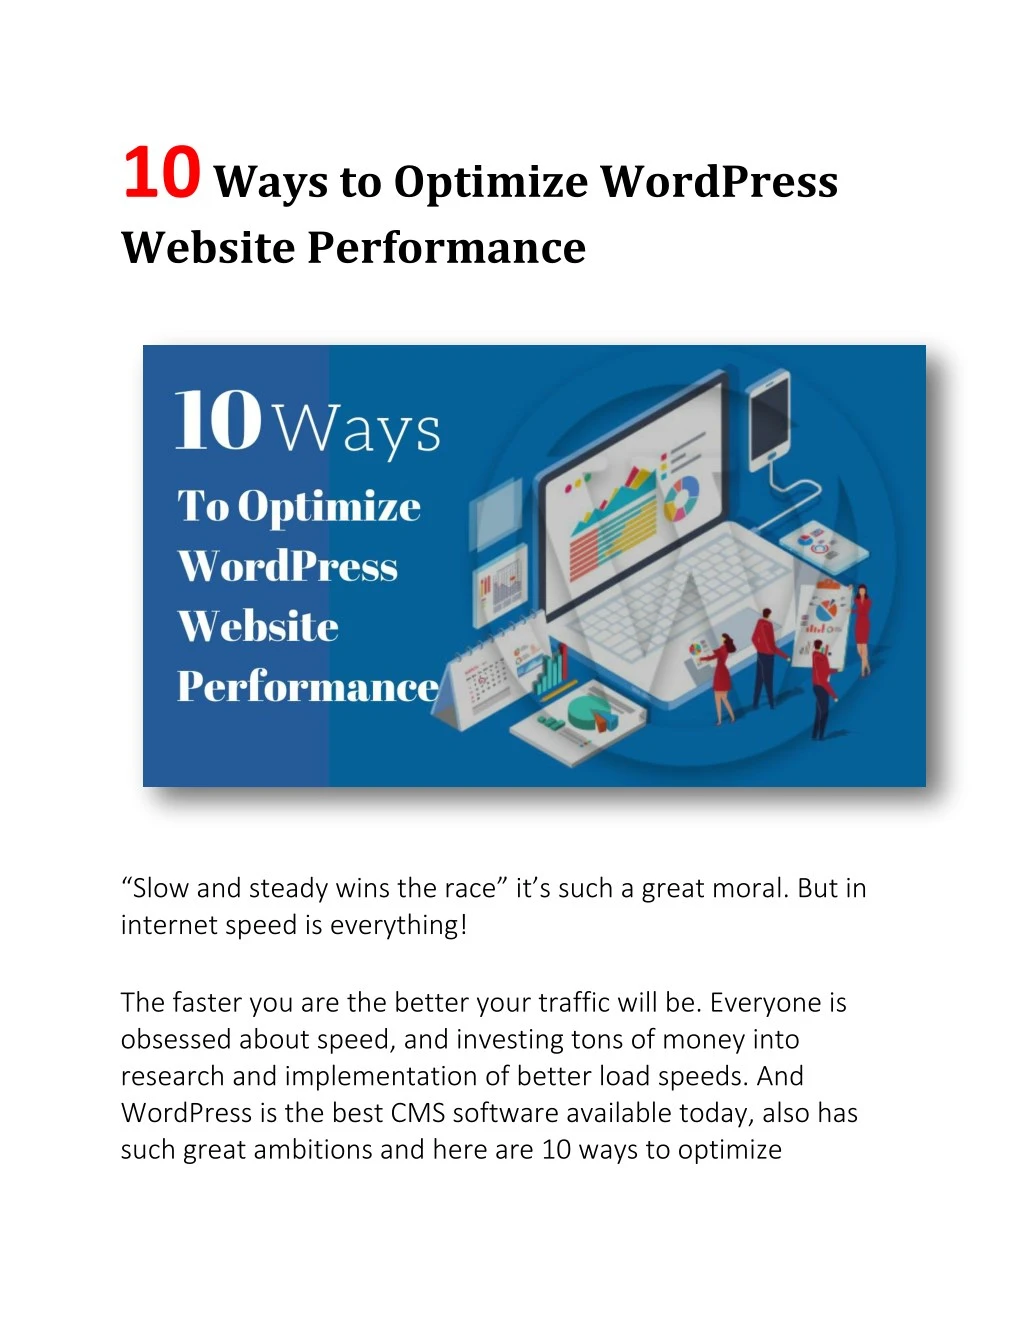 10 ways to optimize wordpress website performance